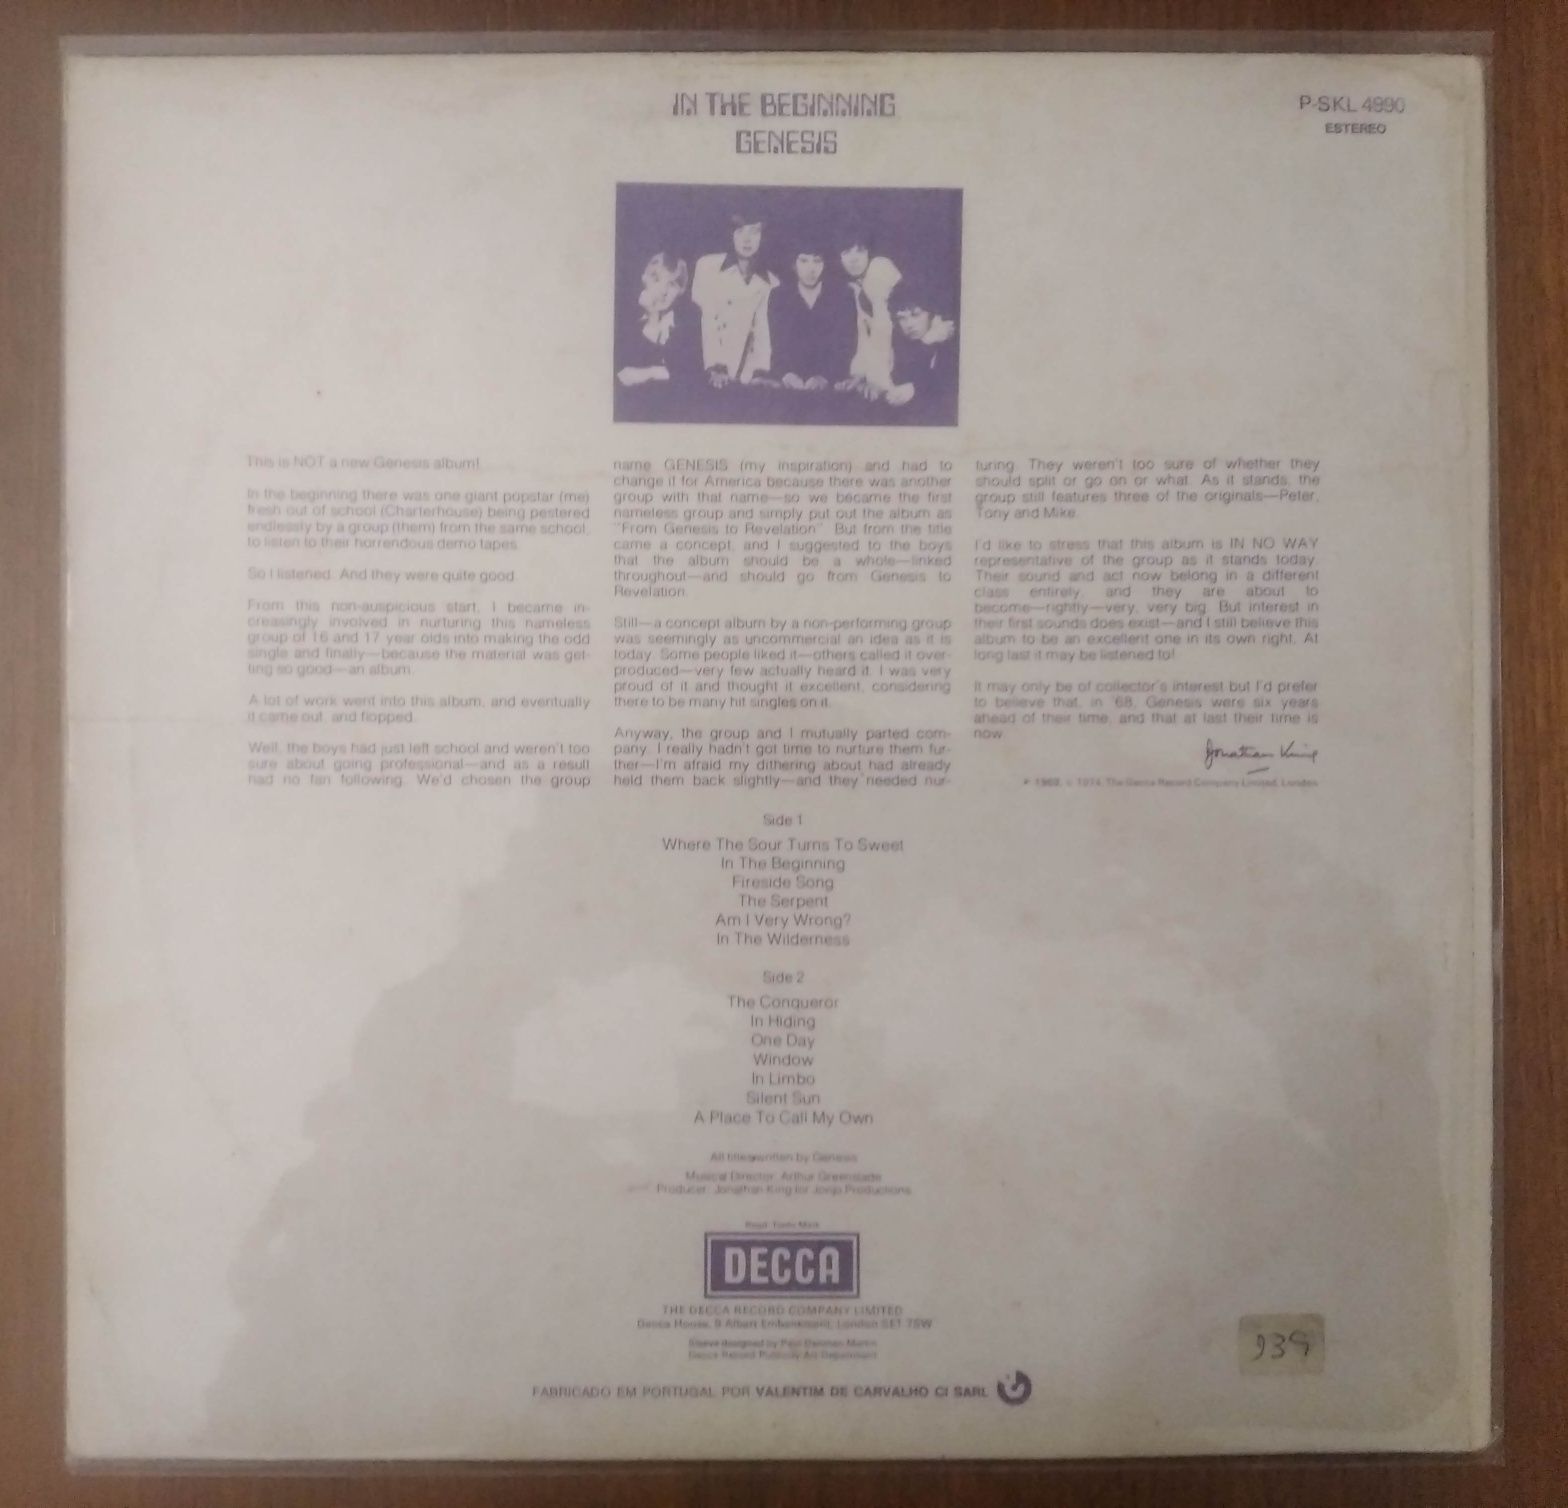 Genesis disco de vinil "In The Beginning"